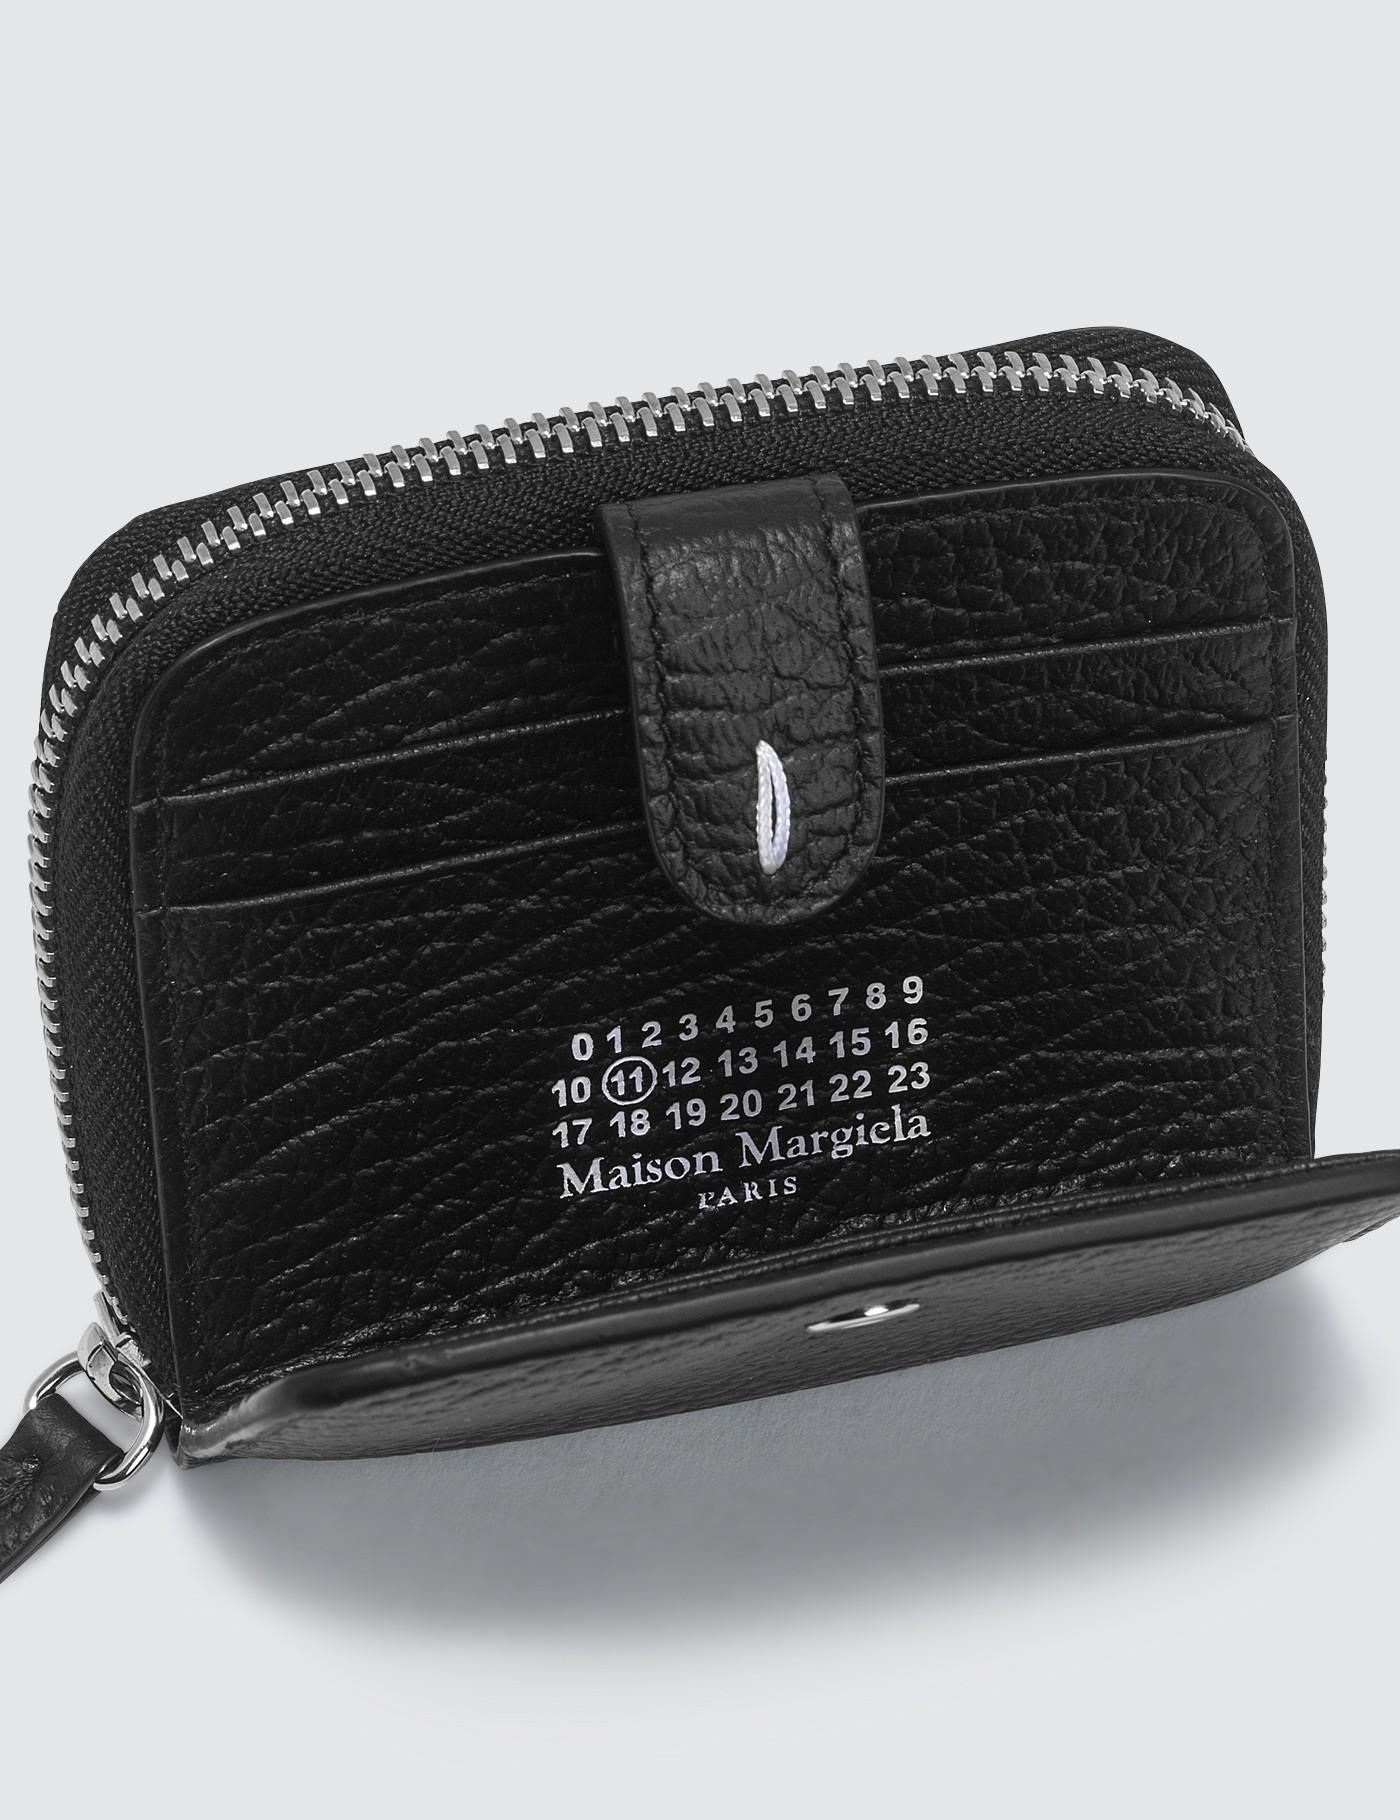 Maison Margiela Leather Small Wallet in Black - Lyst